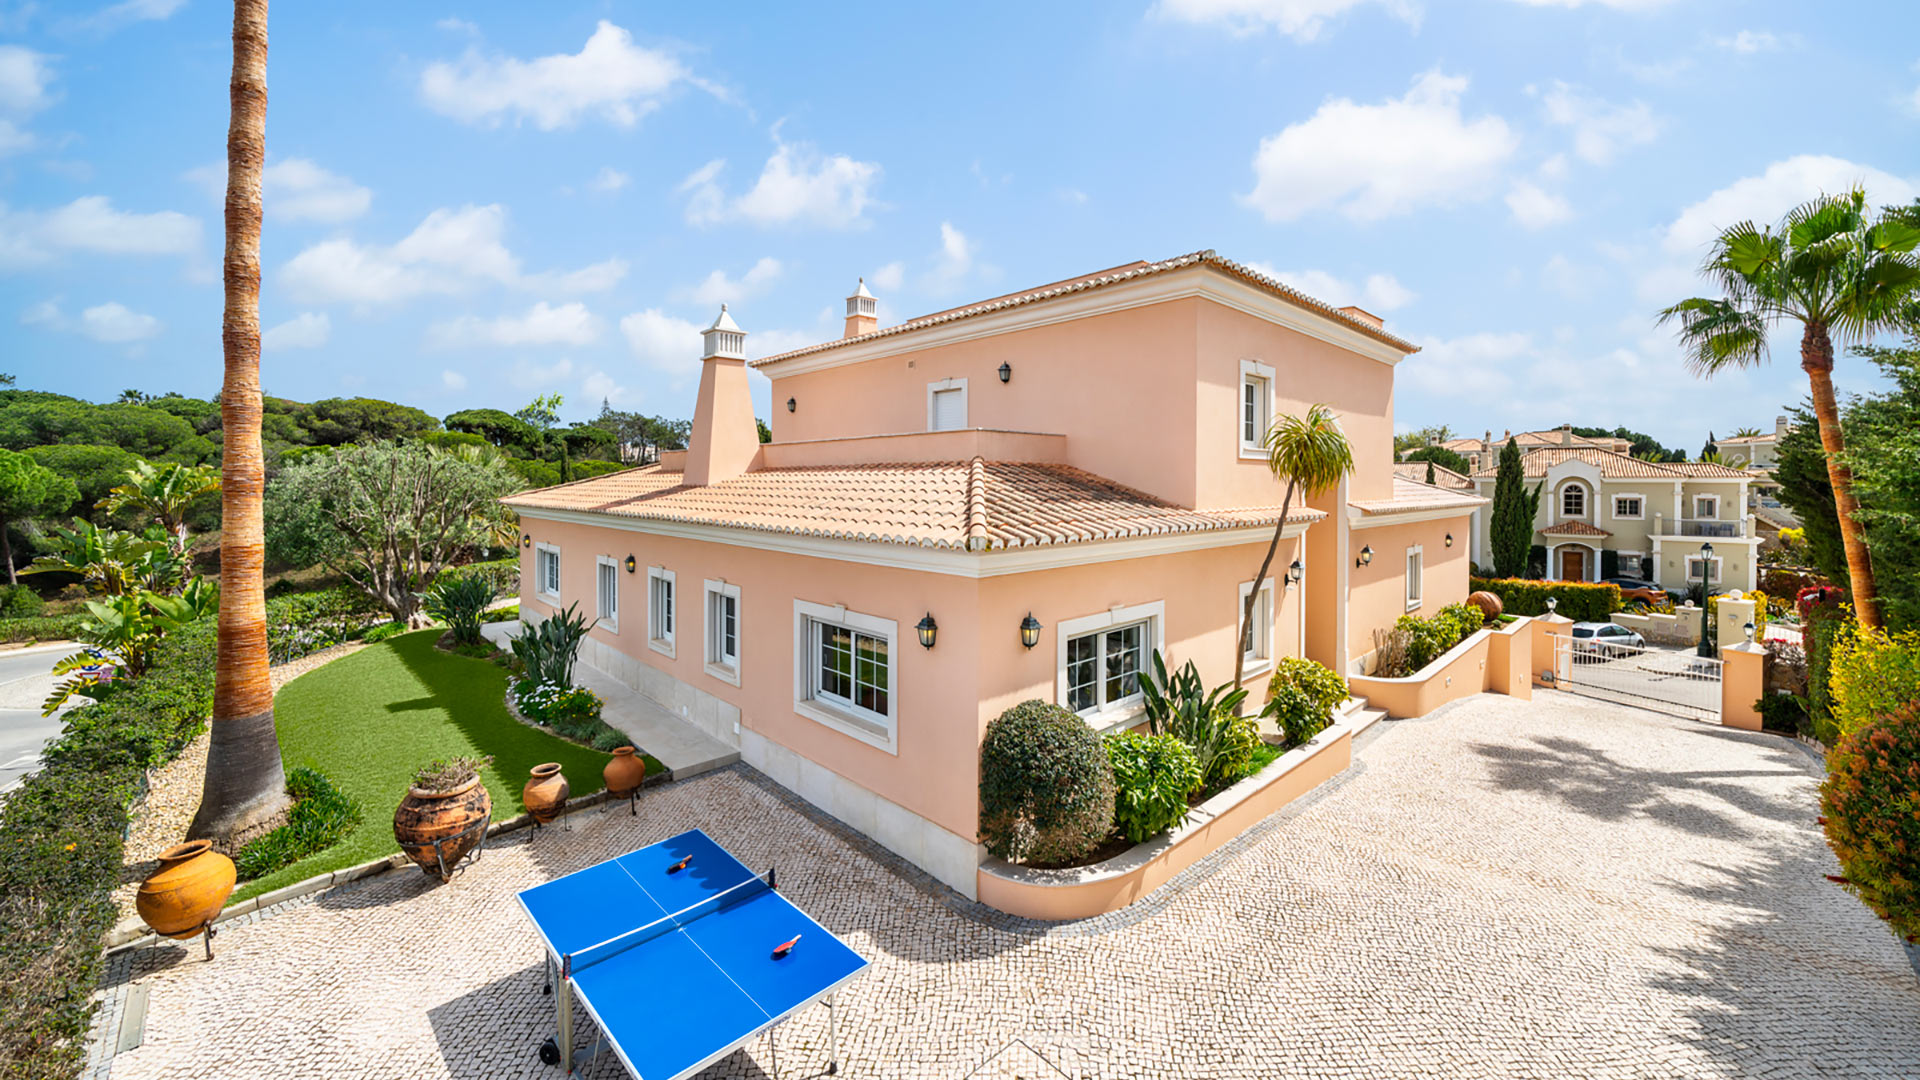 Villa Villa Silk, Rental in Algarve